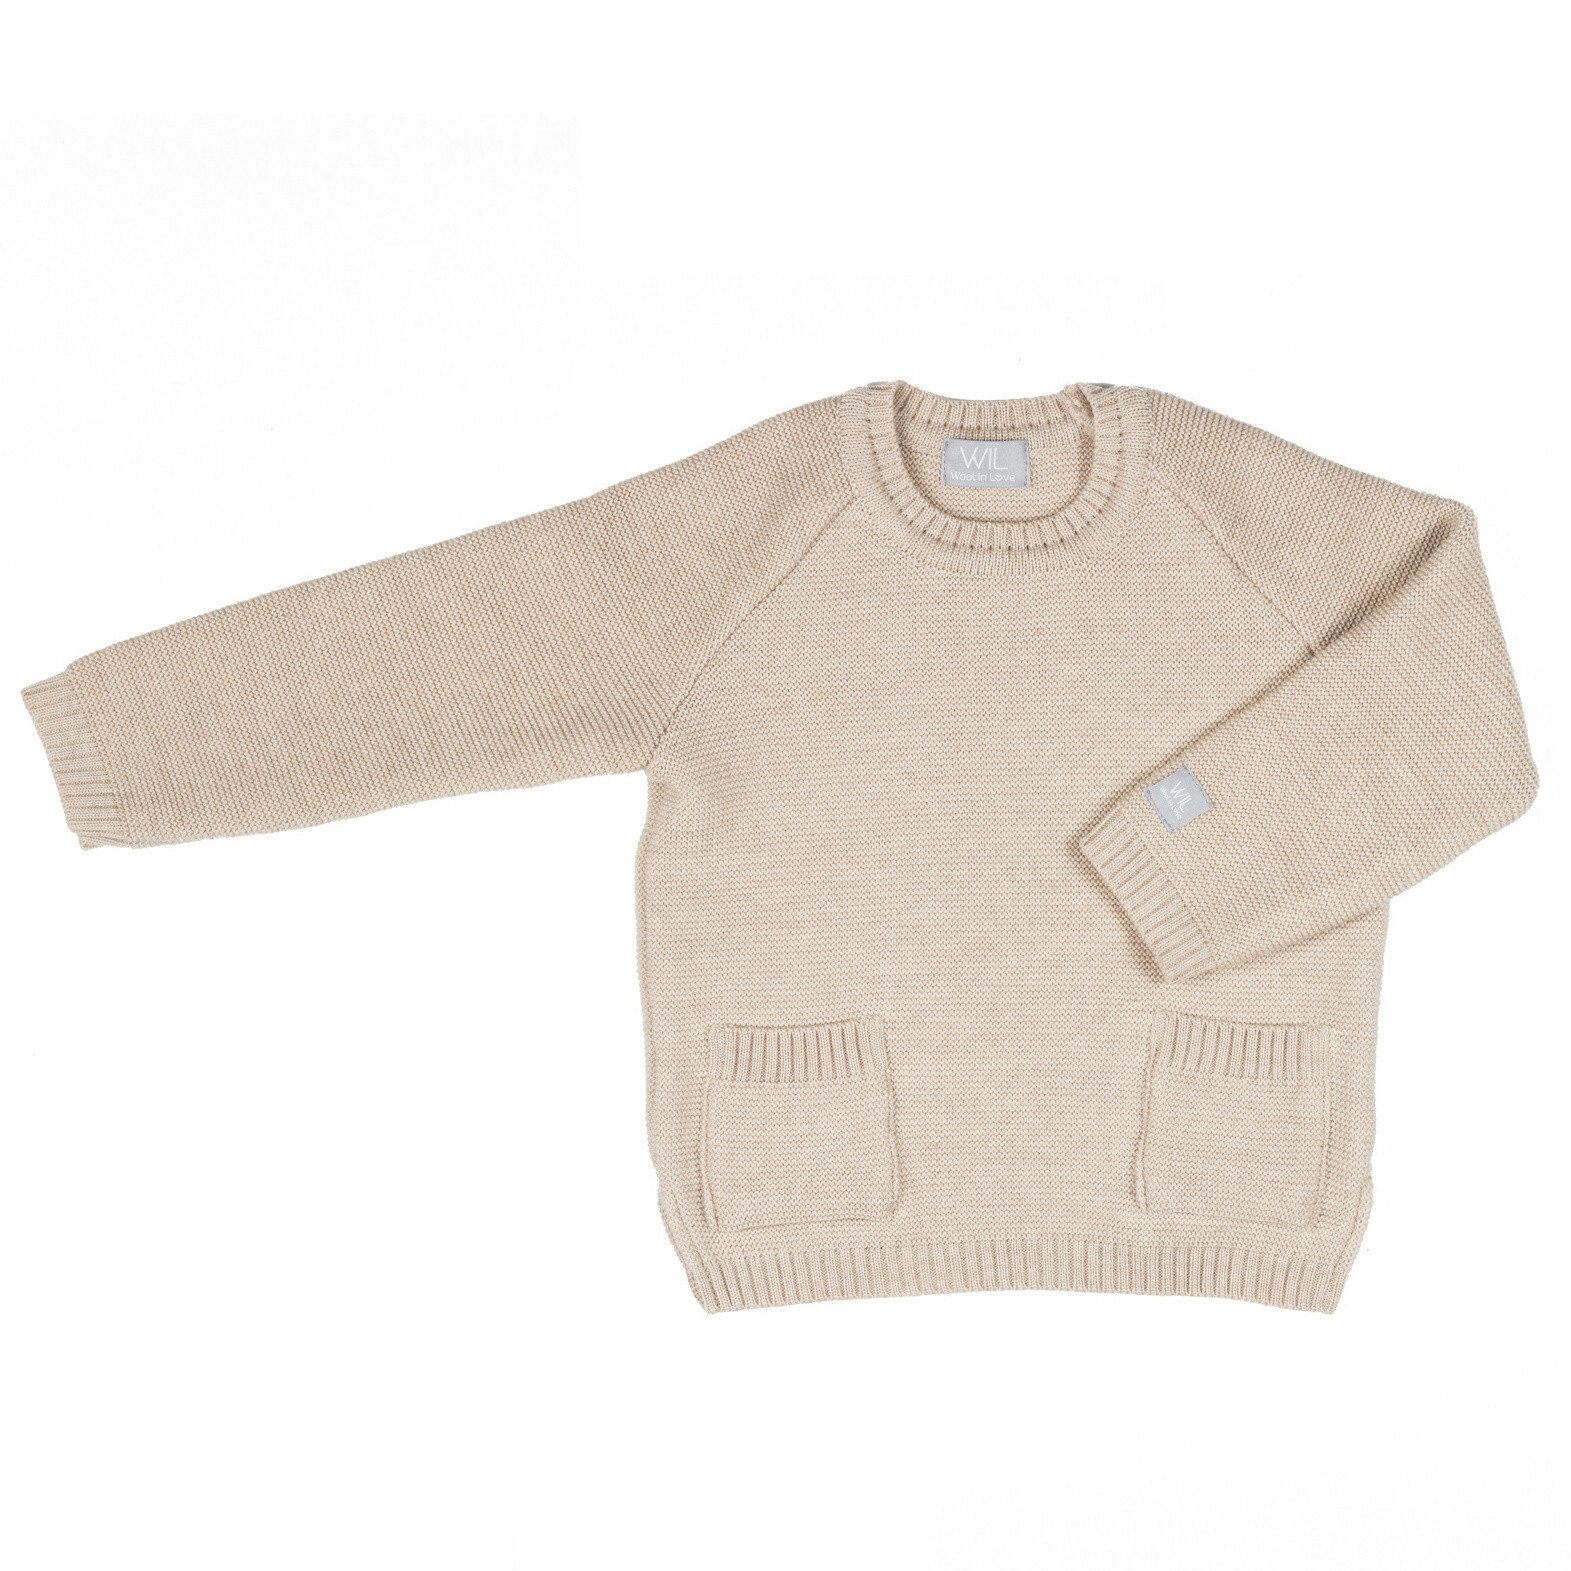 Merino sweater AMITY - Creamy Pink - 68